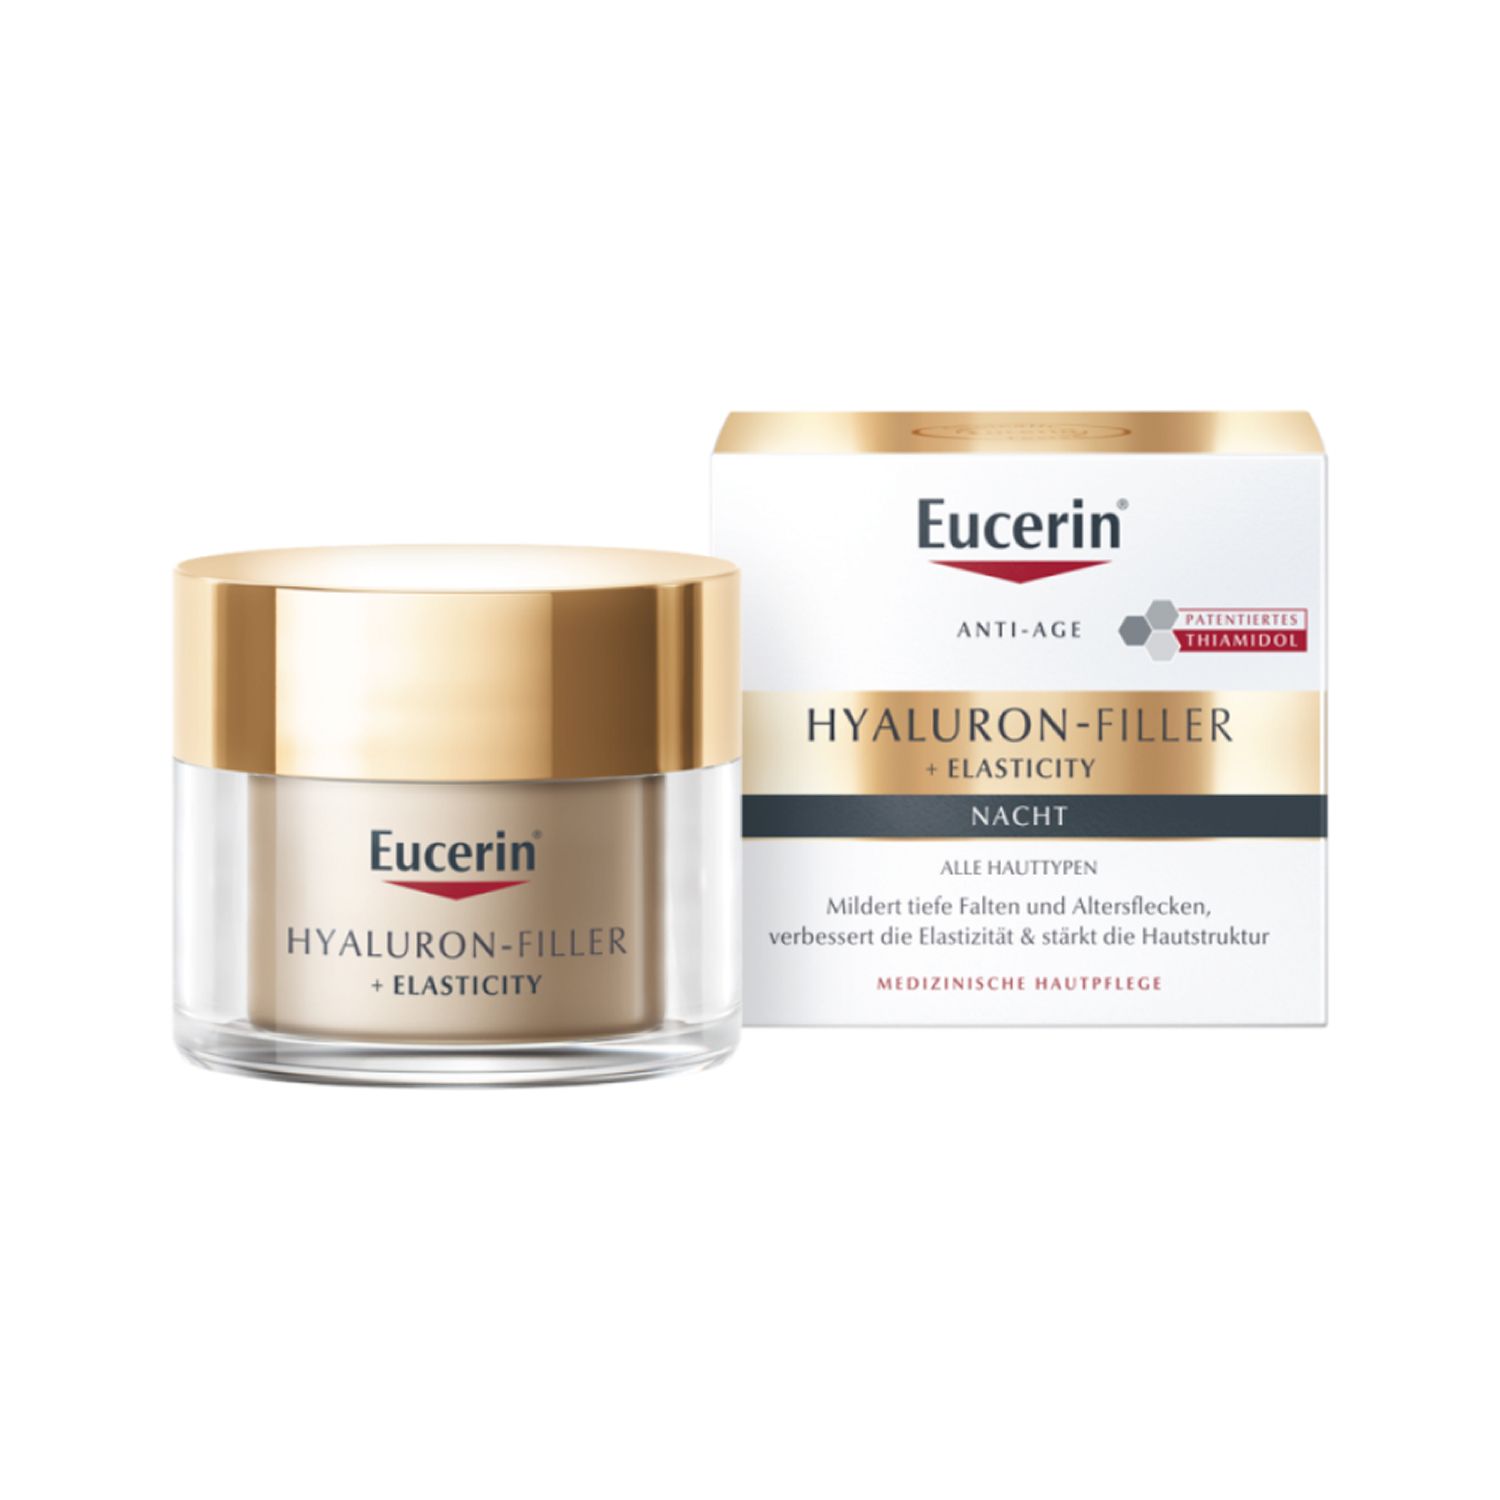 Eucerin® HYALURON-FILLER + ELASTICITY Nachtpflege + Eucerin HYALURON-FILLER Intensiv-Maske in Geschenkbox GRATIS